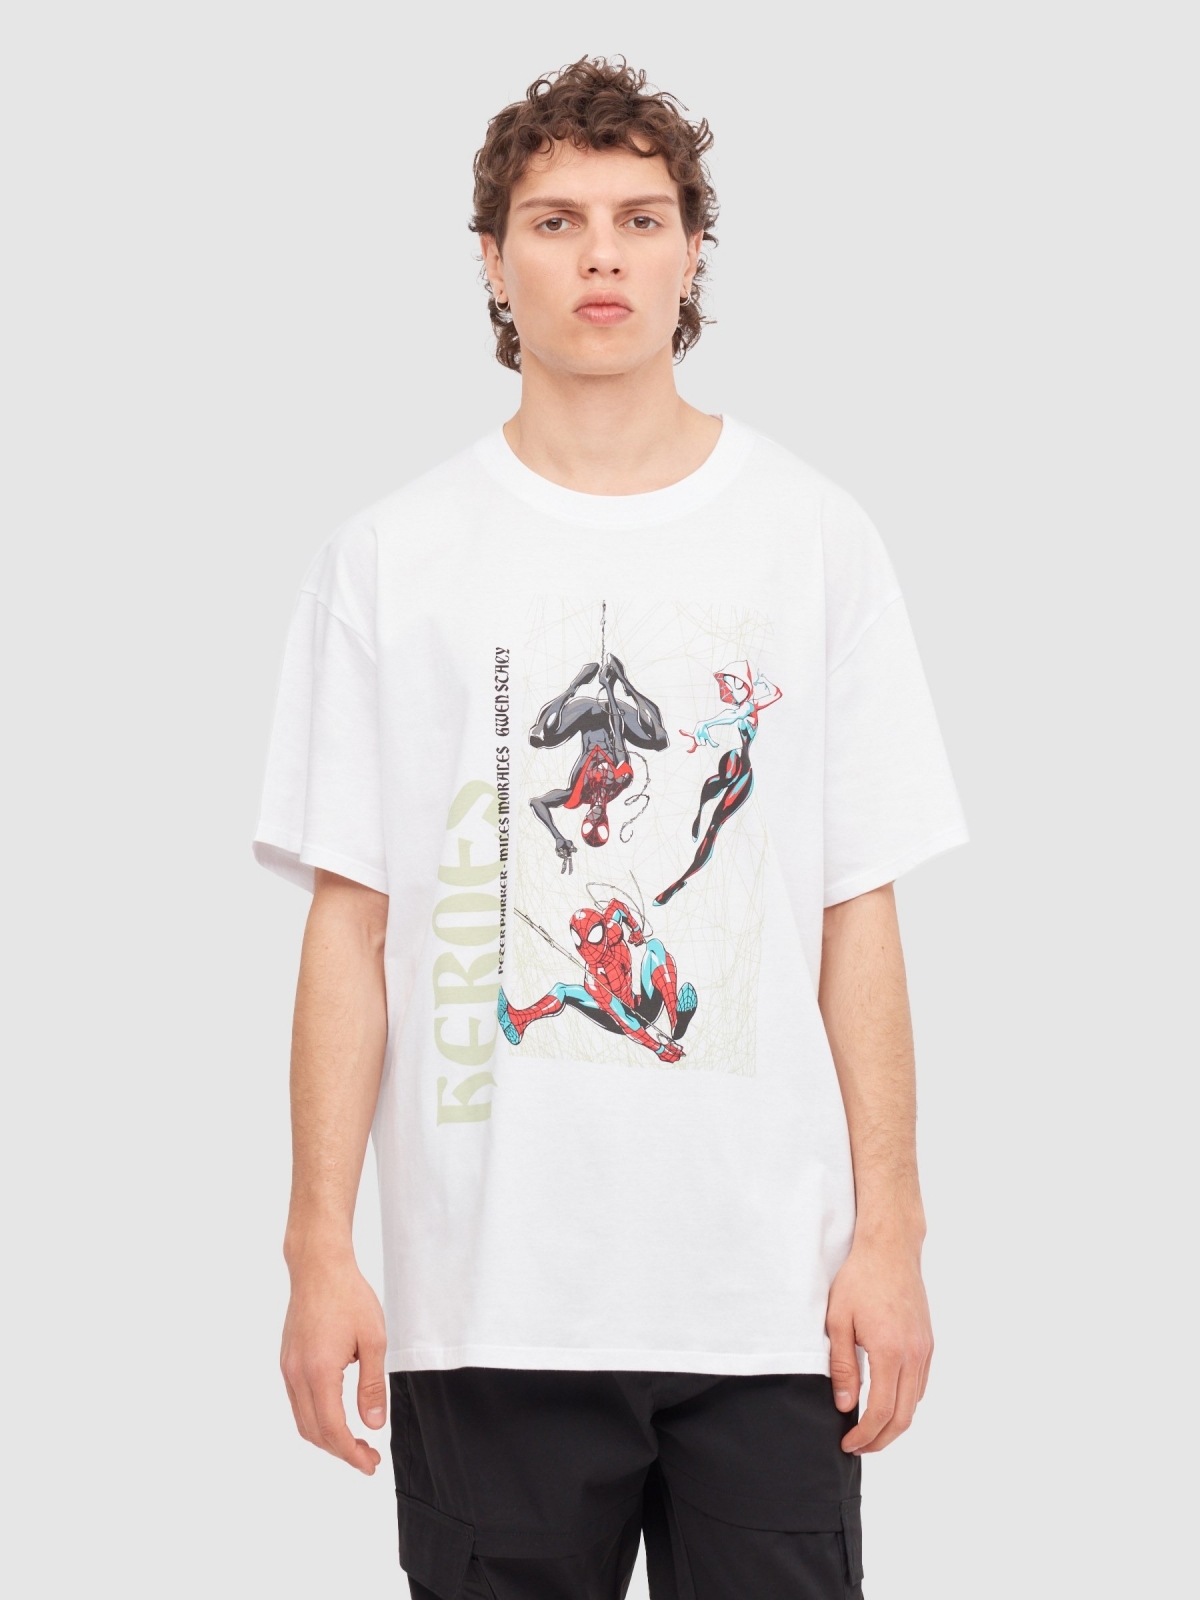 T-shirt Spiderman Heróis branco vista meia frontal